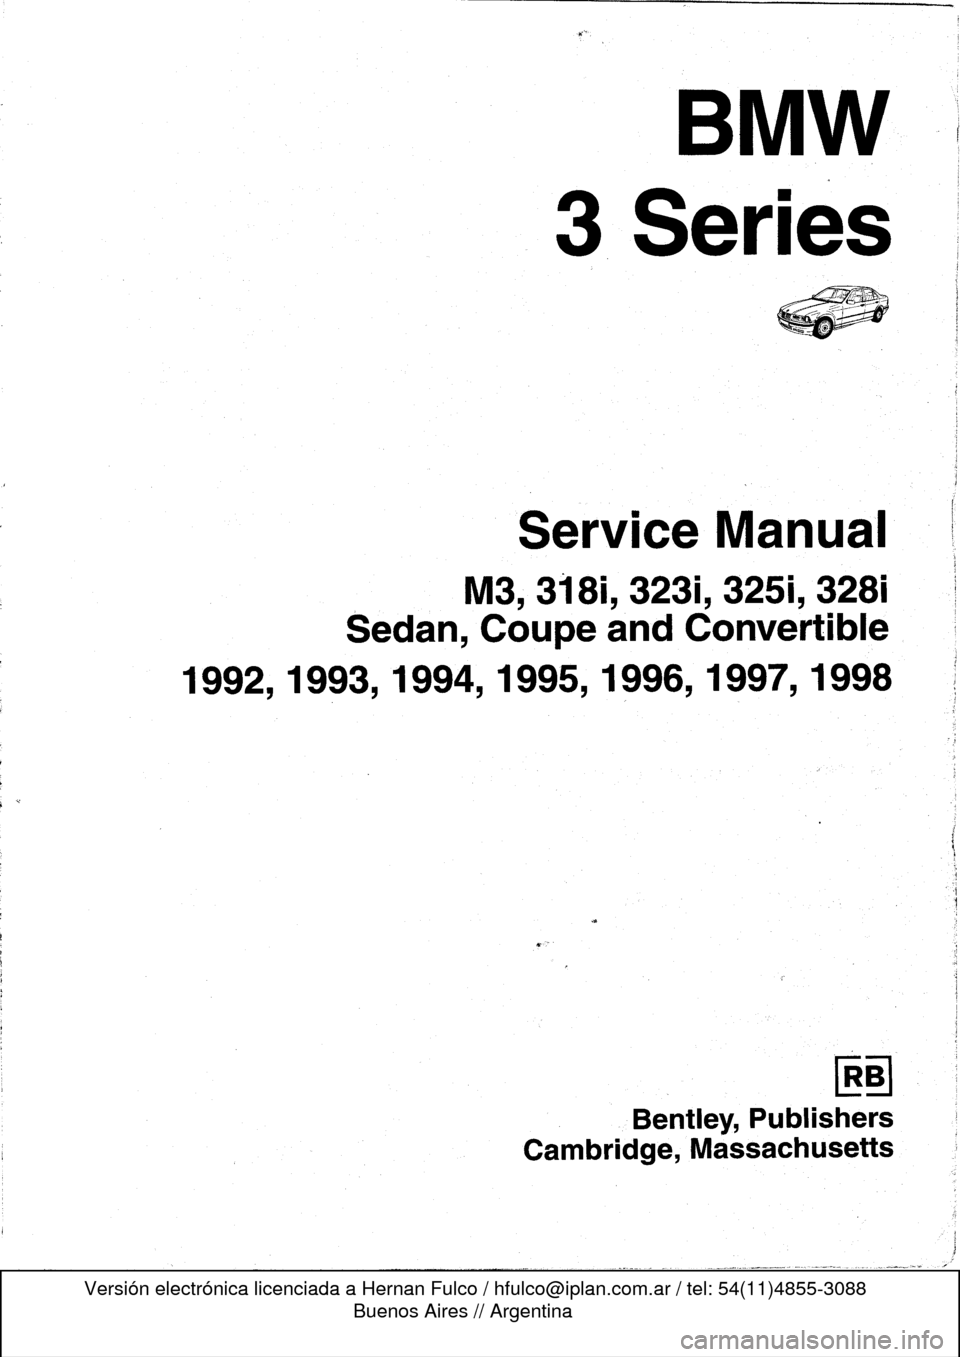 BMW 325i 1996 E36 Workshop Manual 
B
mw

3
Series

M3,
3181,3231,3251,
3281

Sedan,
Coupe
and
Convertible

1992,1993,1994,1995,
1996,1997,
1998

Bentley,
Publishers

Cambridge,
Massachusetts 